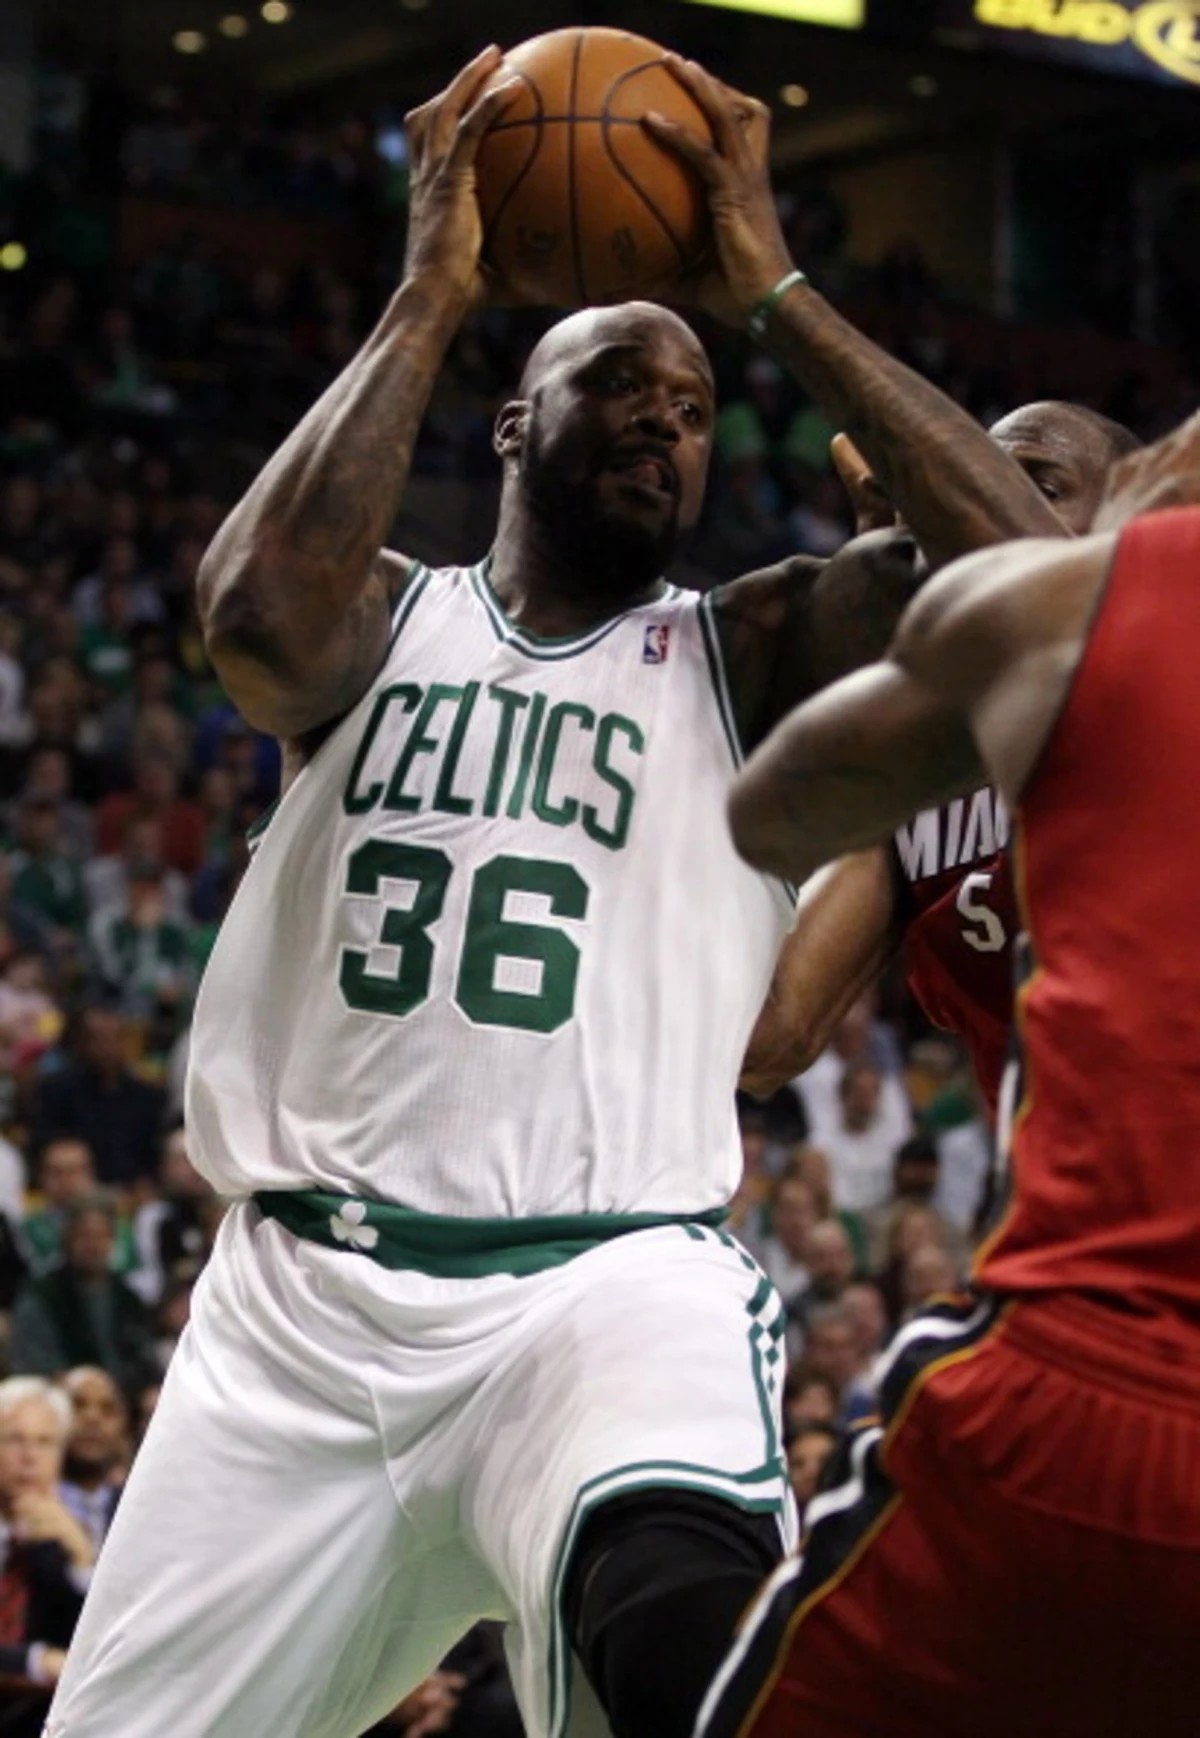 Remember Shaq's Celtics Days [VIDEO]